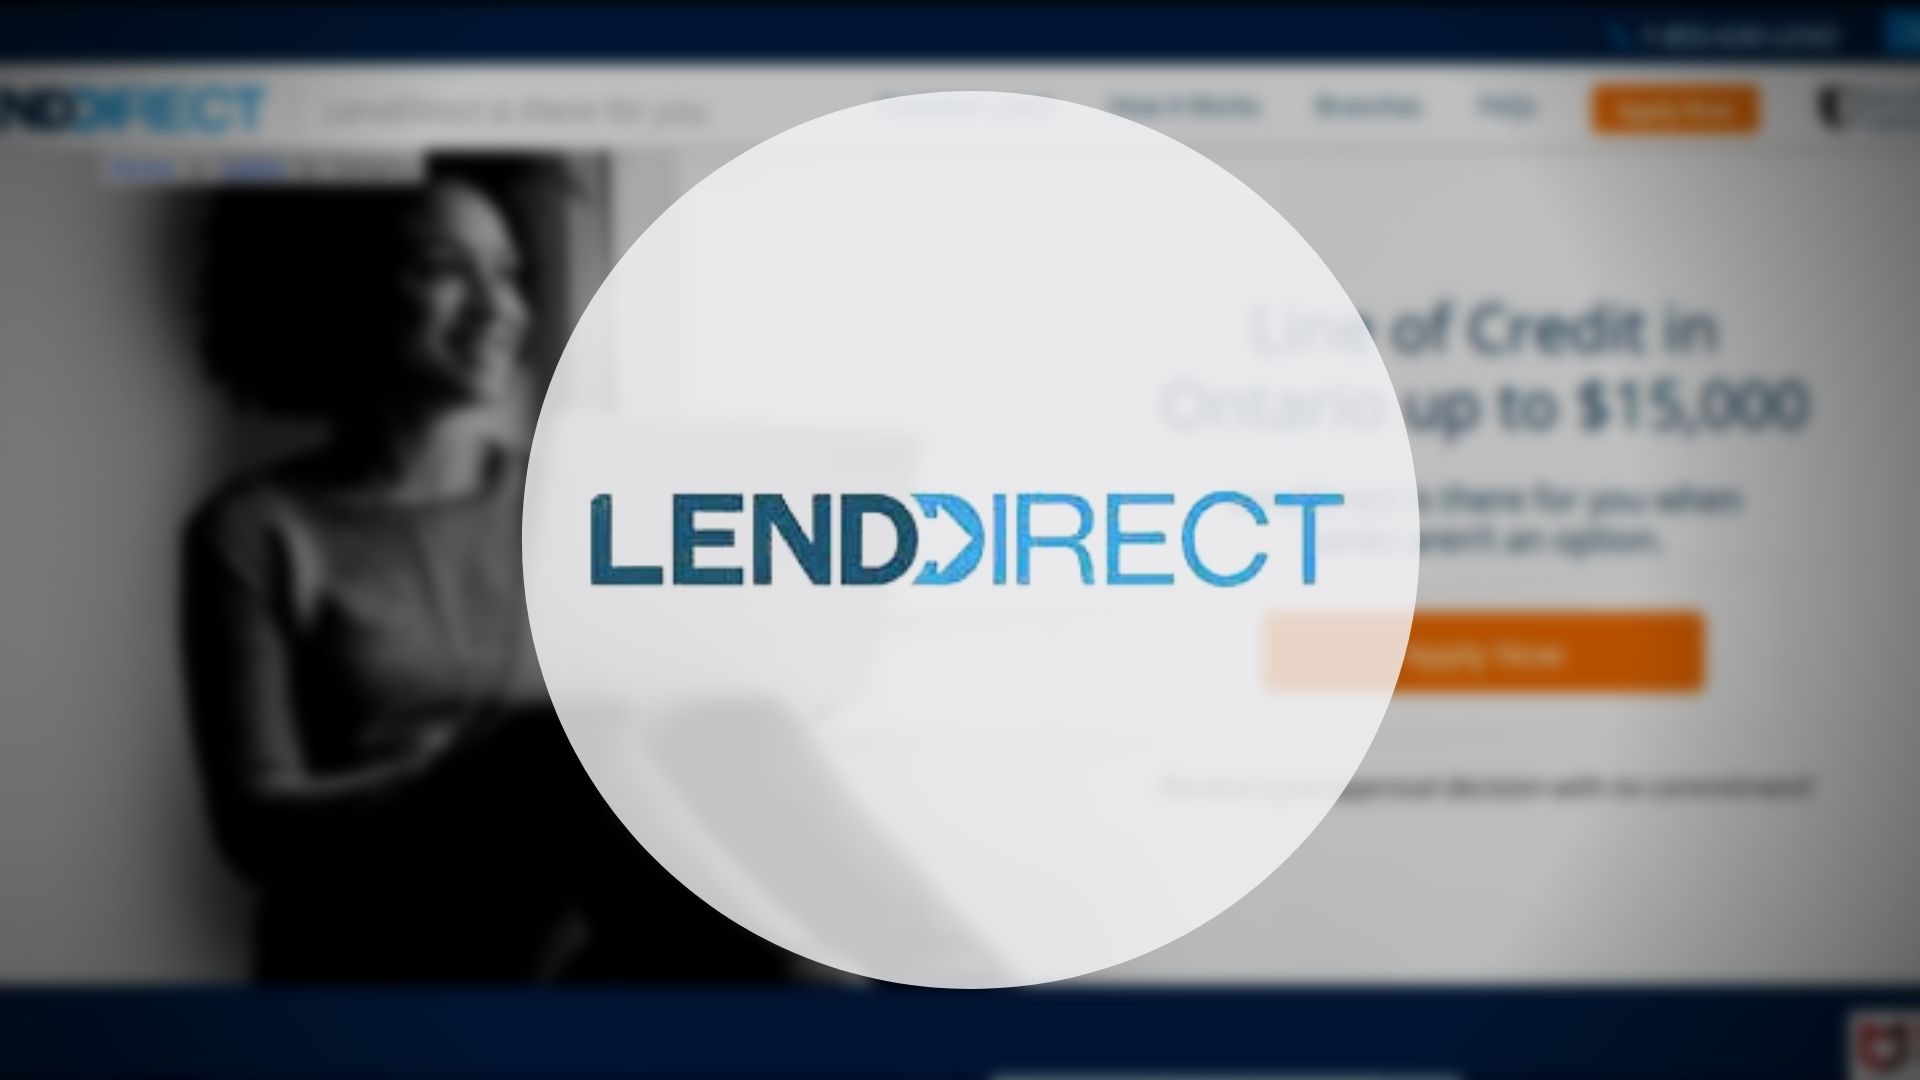 LendDirect